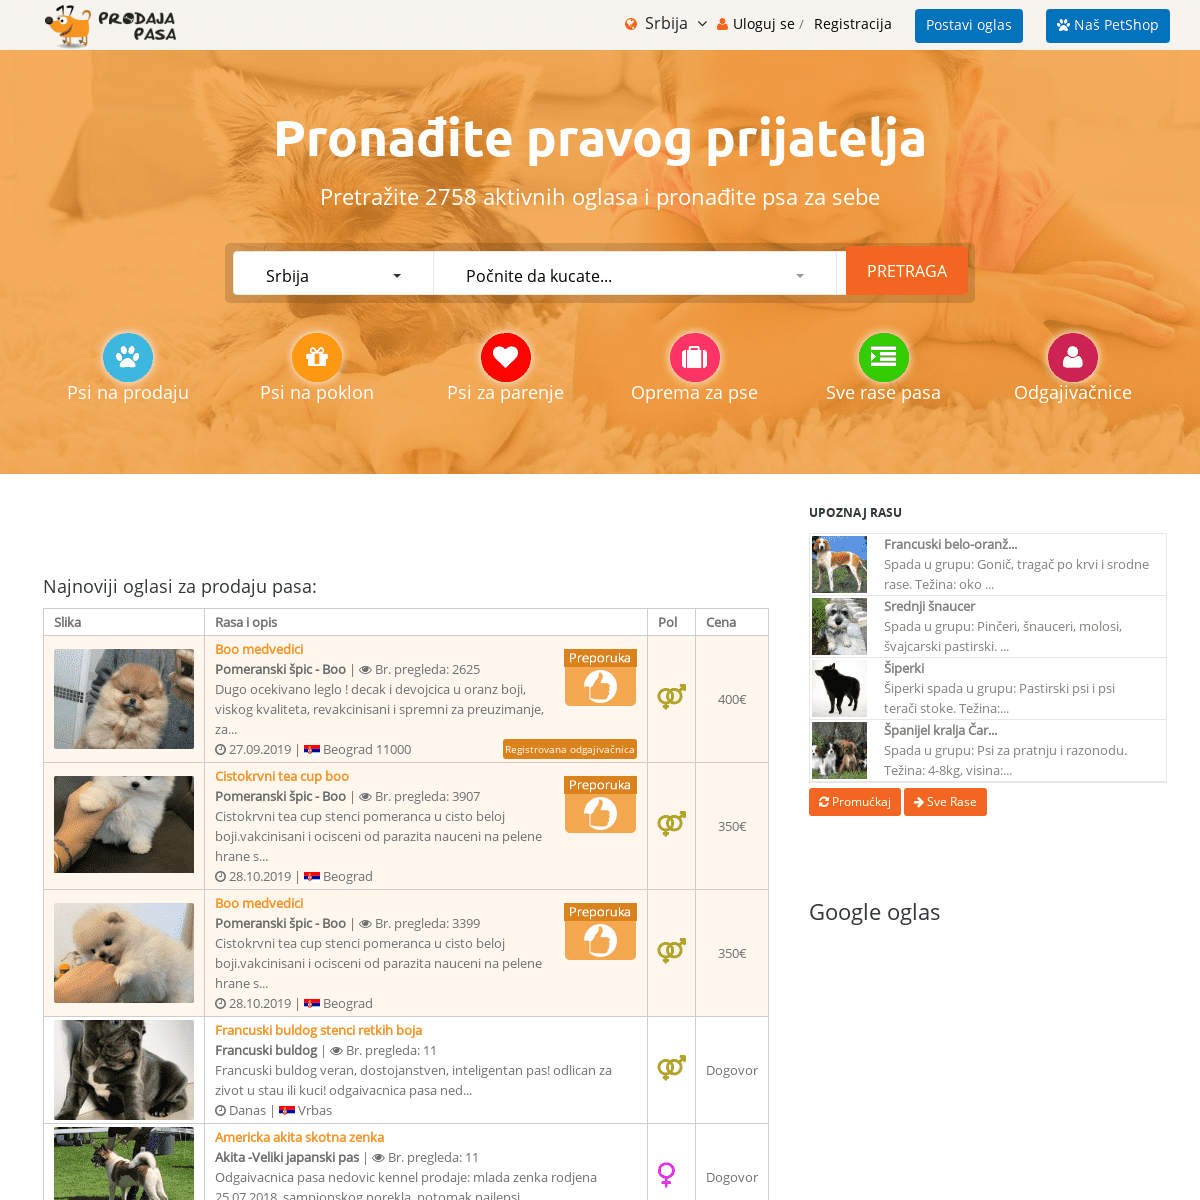 A complete backup of prodajapasa.com